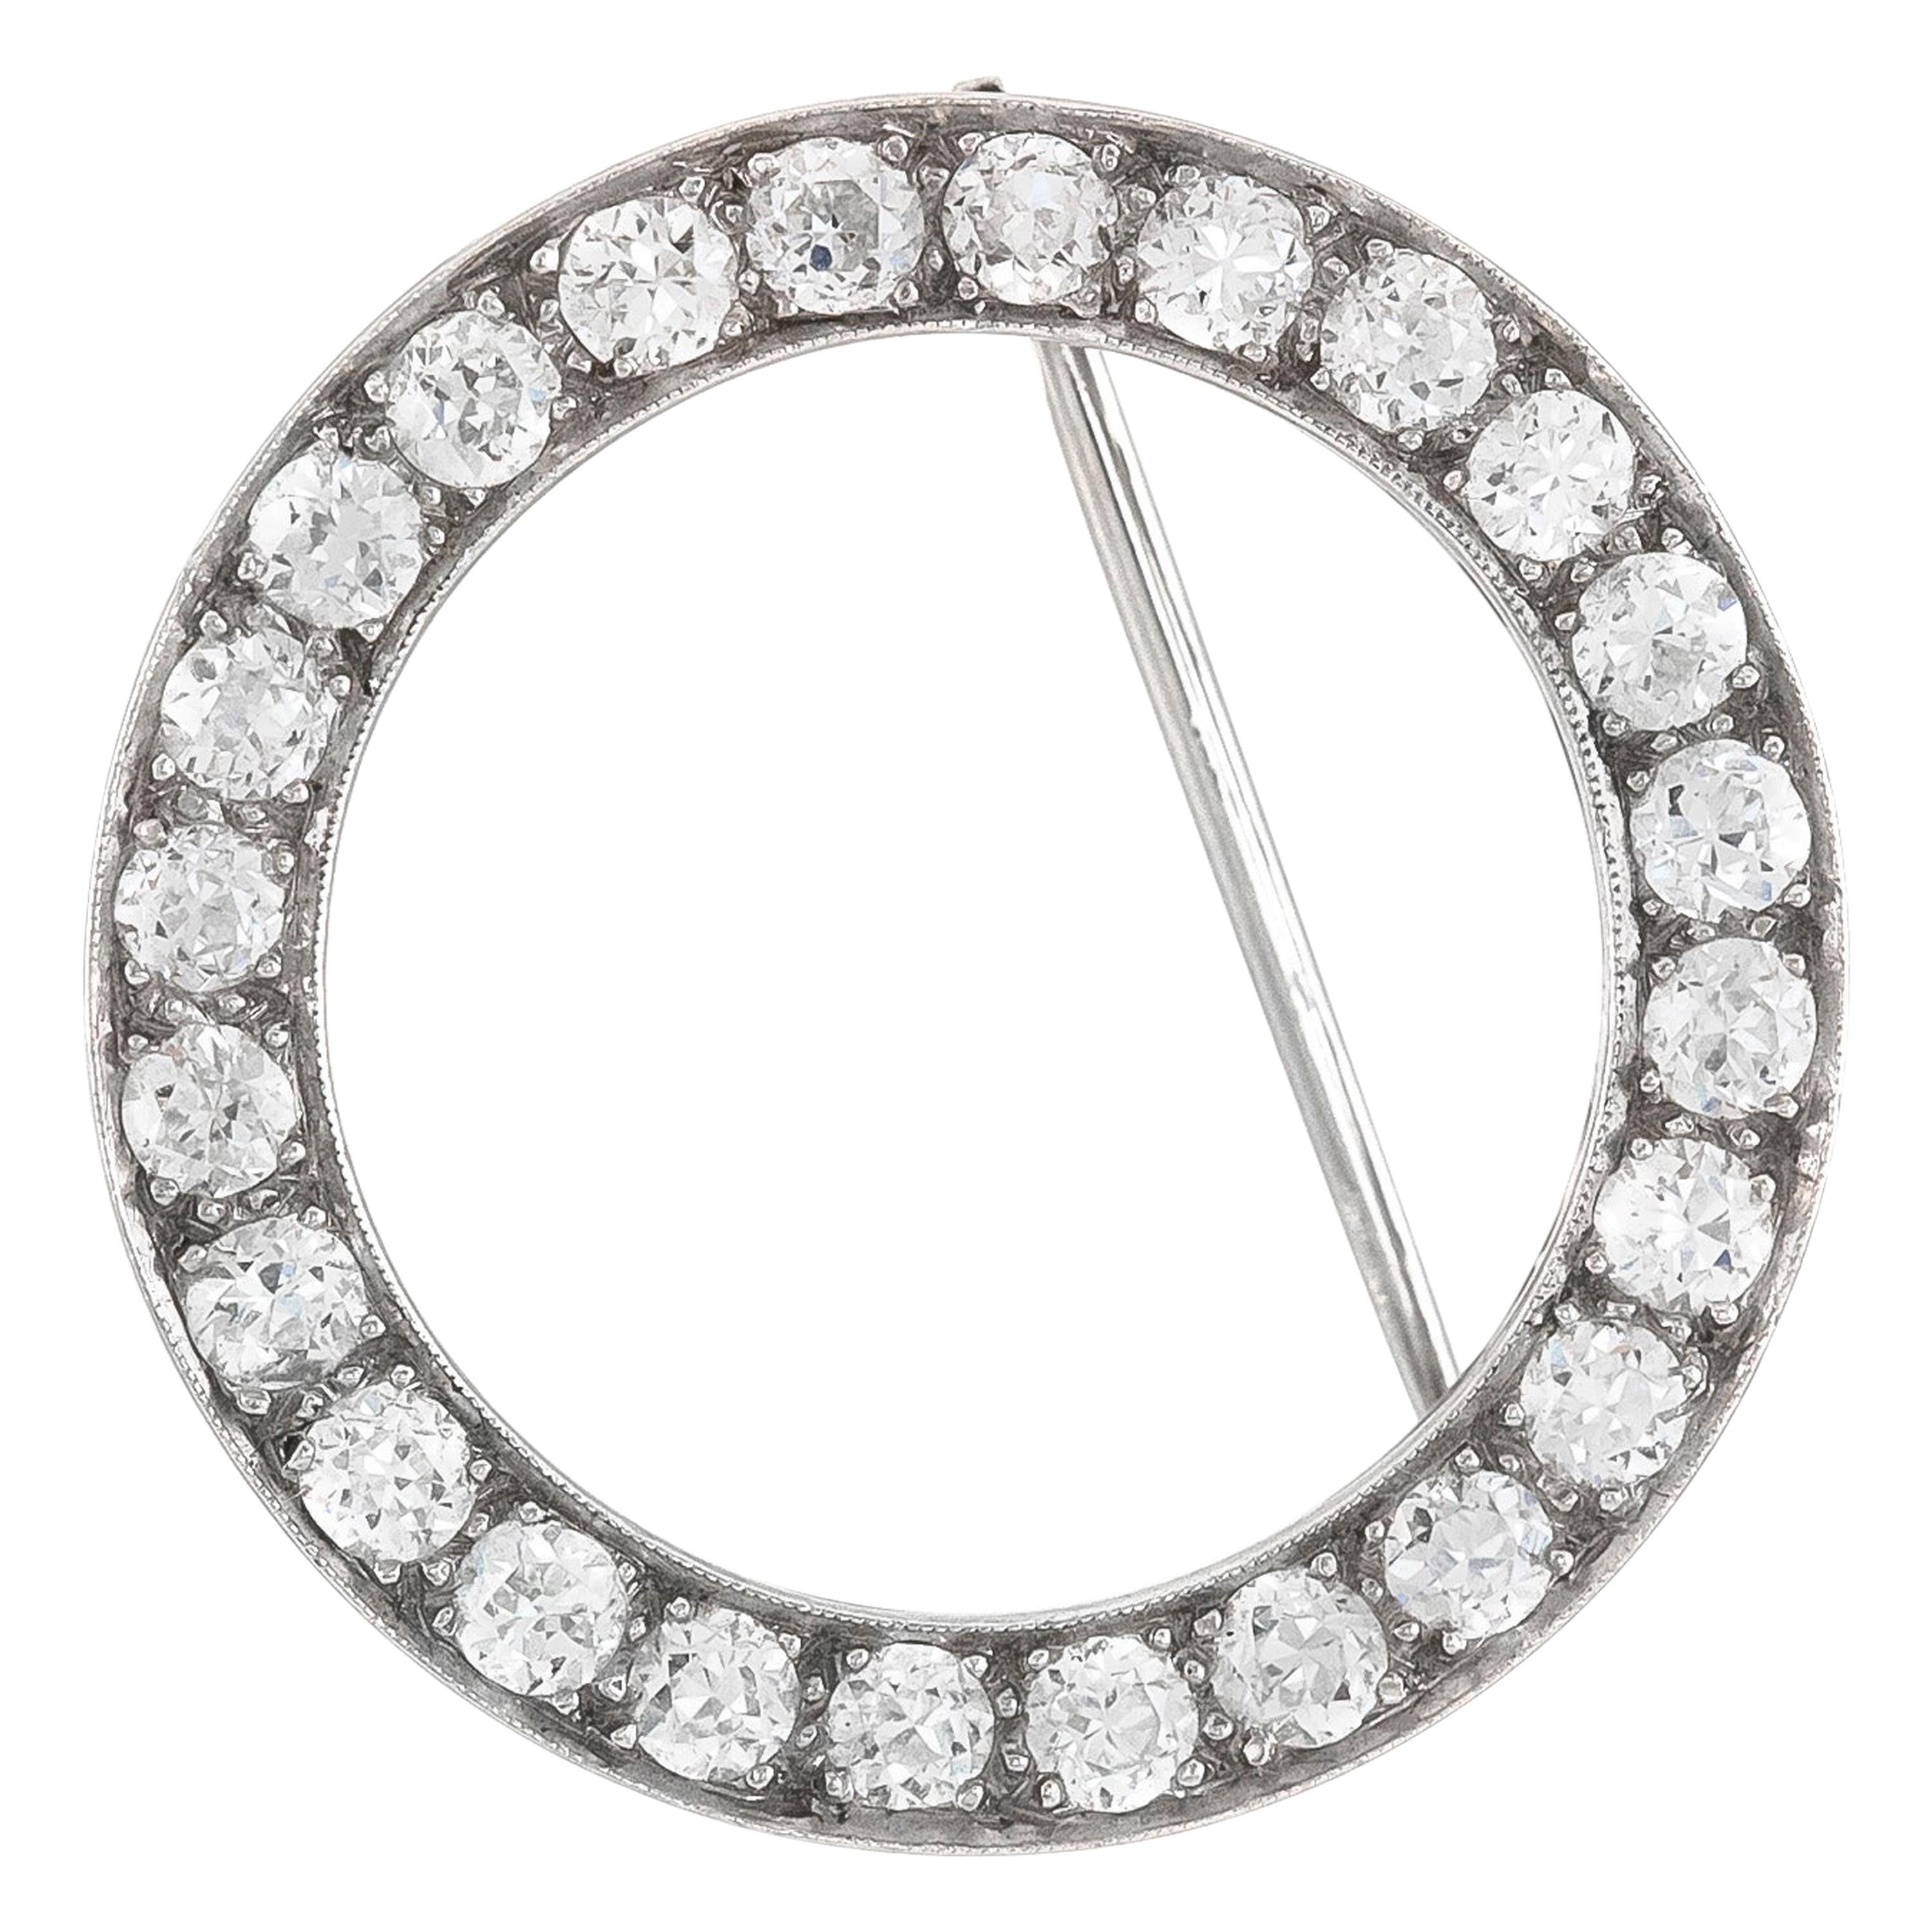 1930s Circle Pin with Diamonds